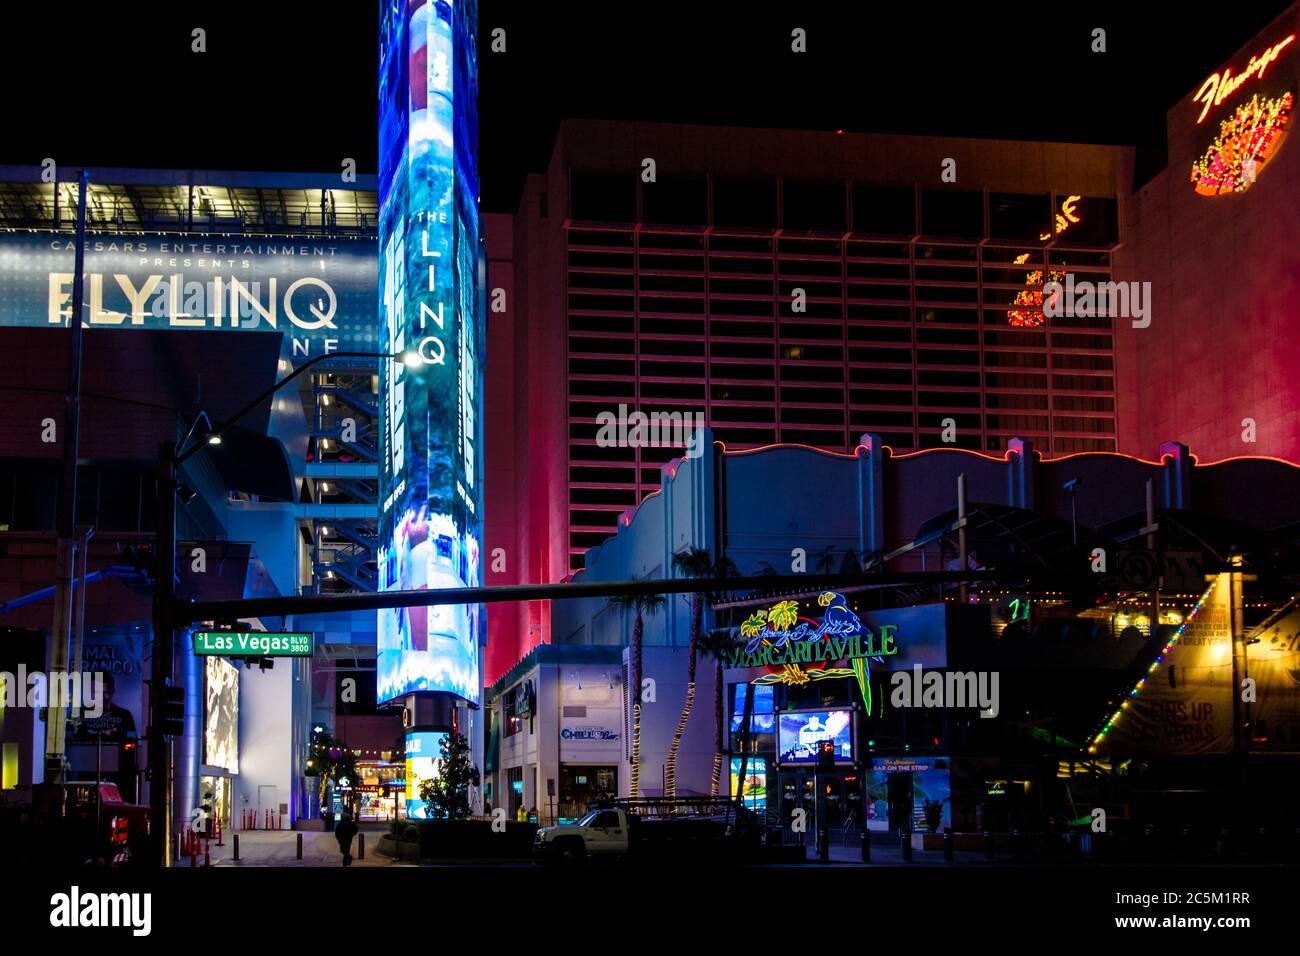 Las Vegas, Nevada, USA - February 20, 2020: Illuminated neon lights of the Las Vegas Strip with street sign for the famous Las Vegas Boulevard. Stock Photo